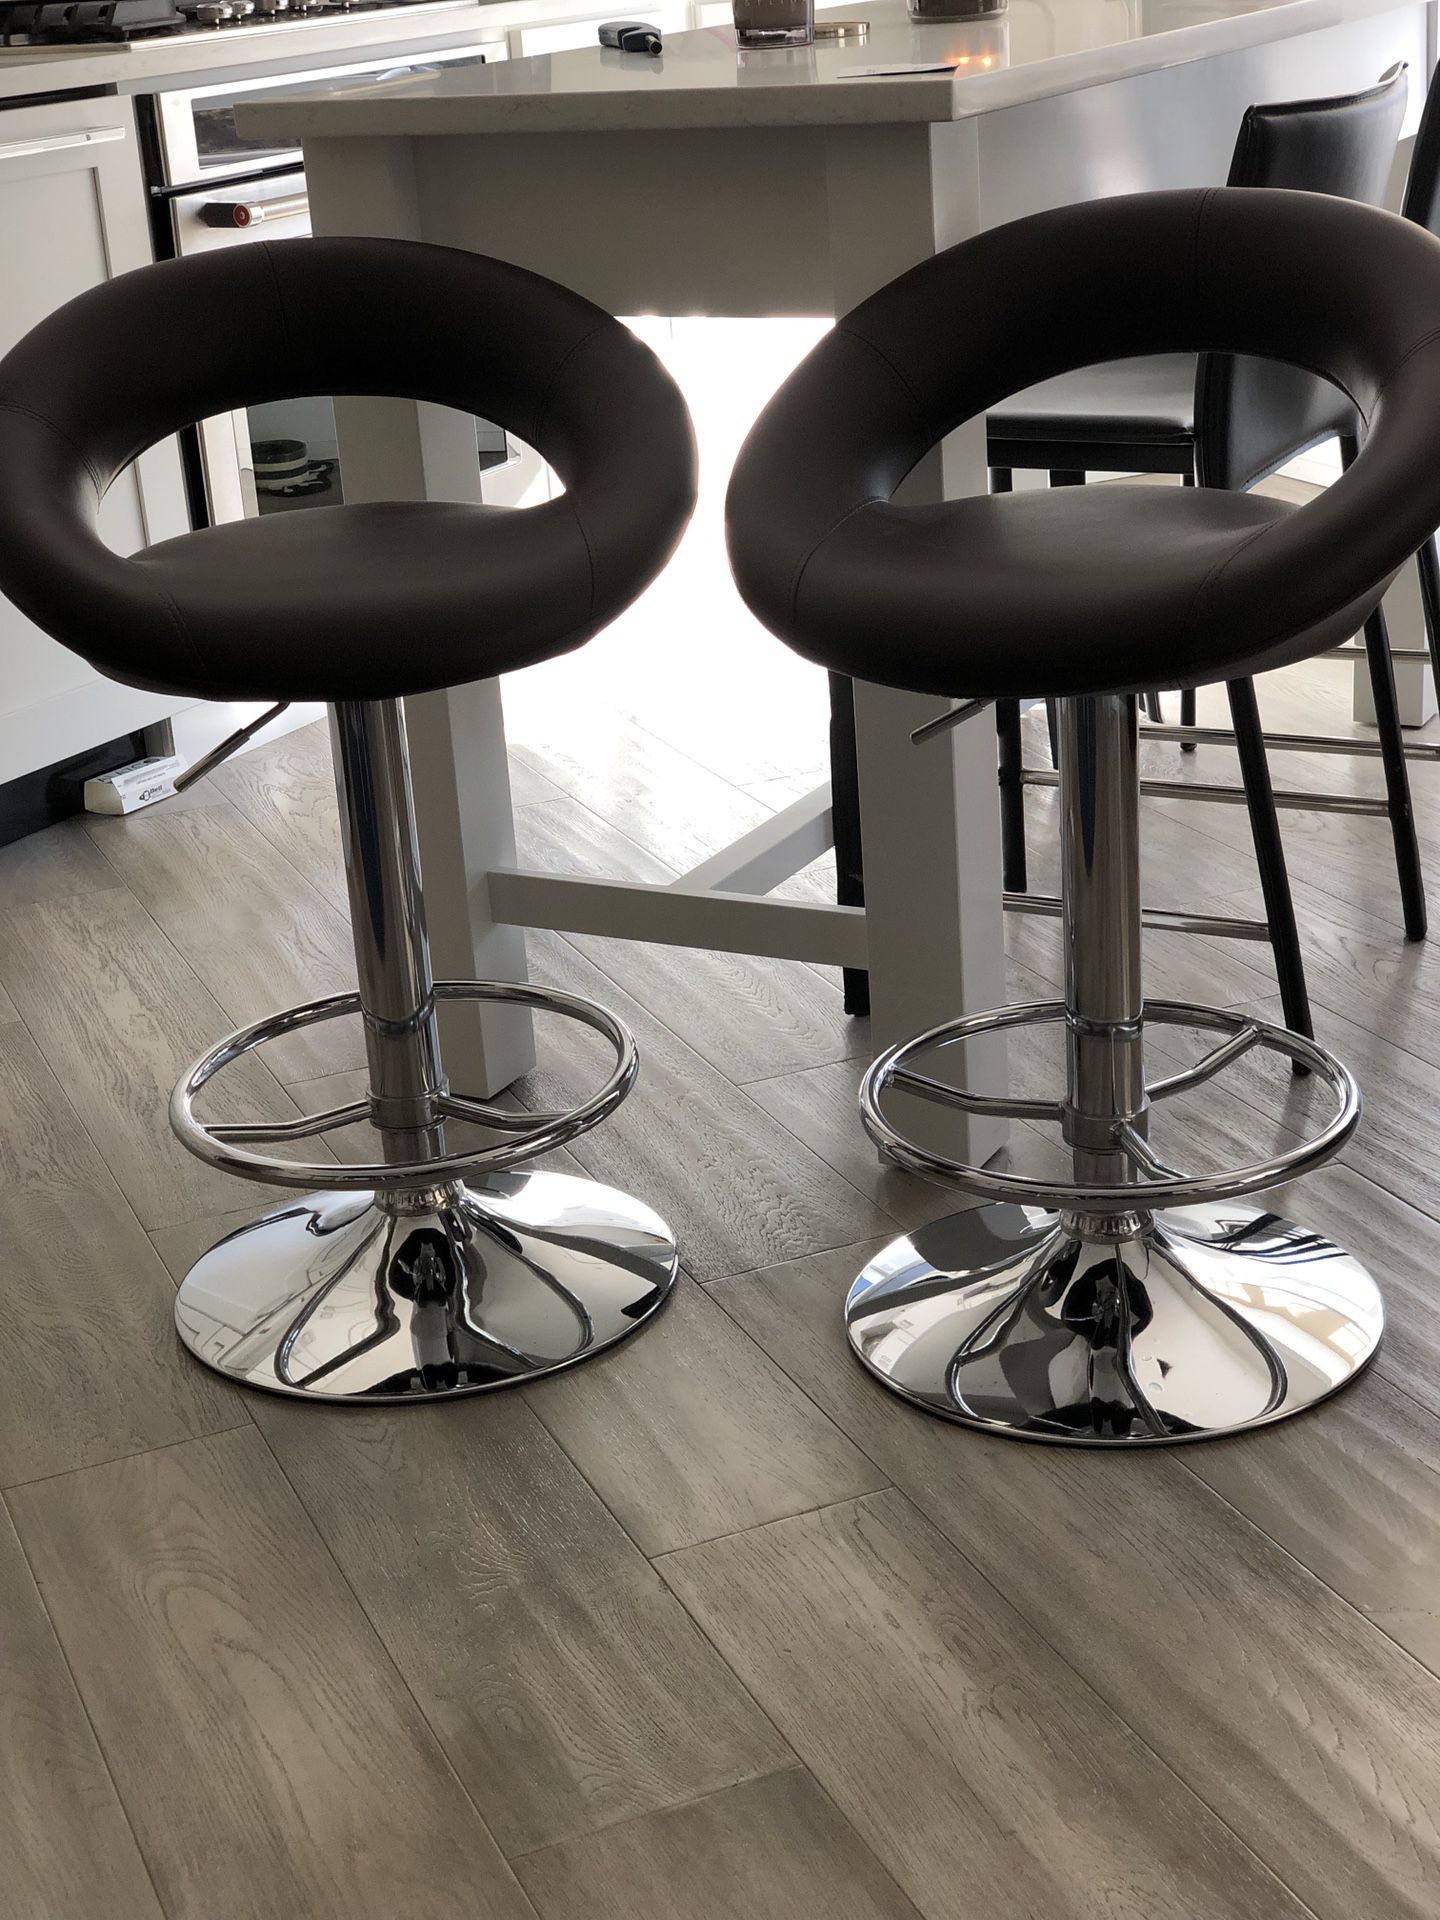 Set of adjustable bar stools